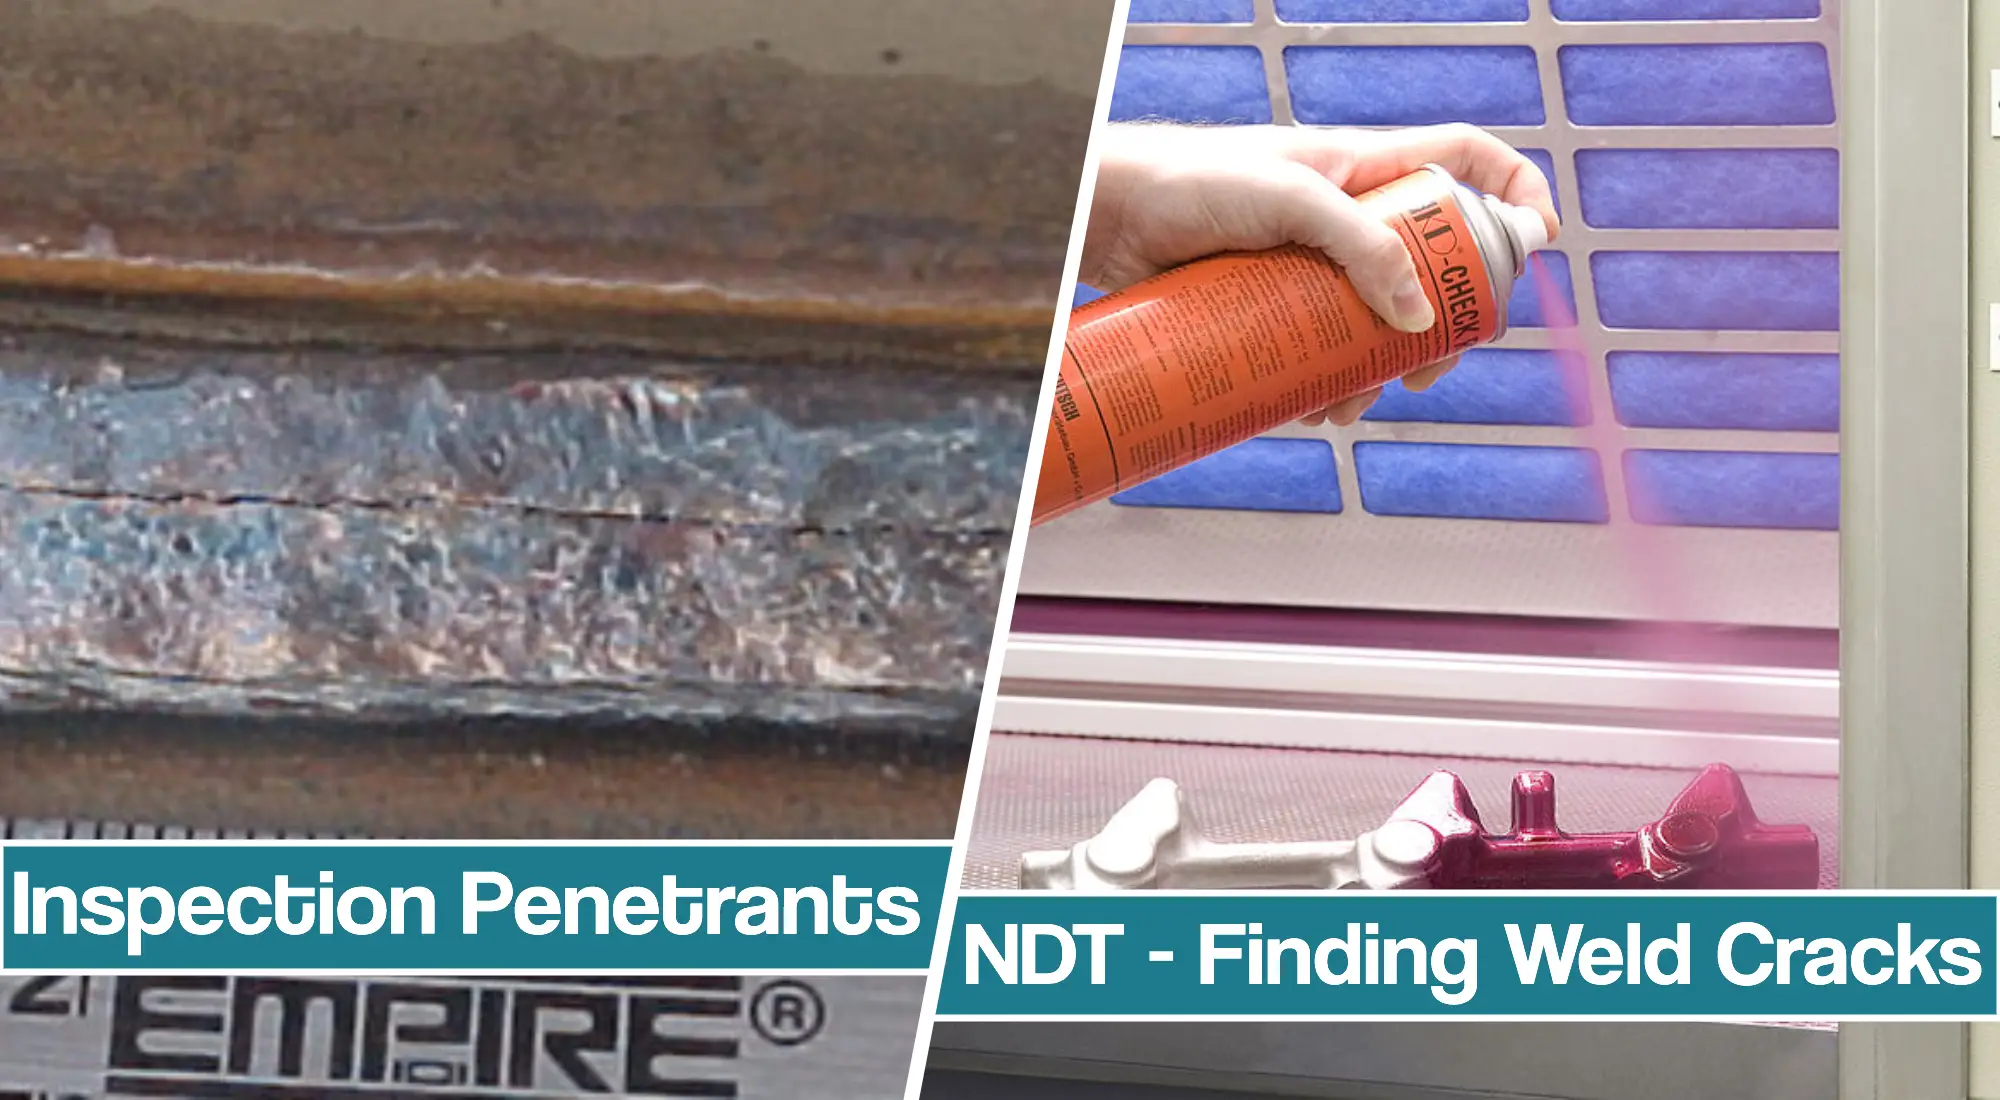 Finding Weld Cracks With Inspection Penetrants